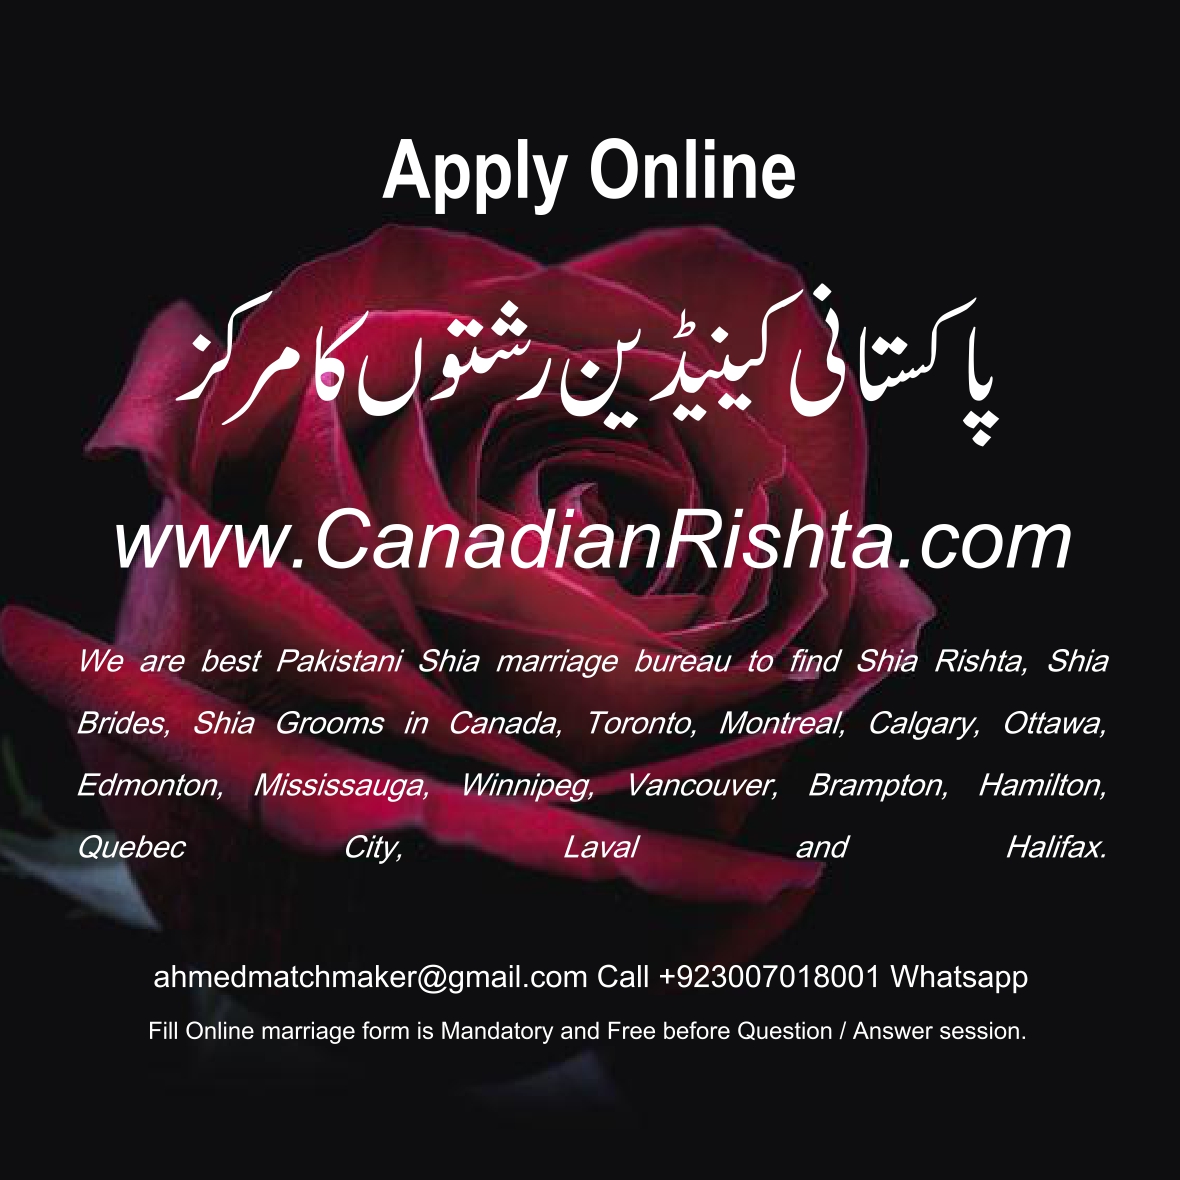 Pakistani-rishta-shaadi-marriage-bureau-Canada-Toronto-Montreal-Calgary-Ottawa-Vancouver-Brampton-Hamilton-Quebec-5.jpg